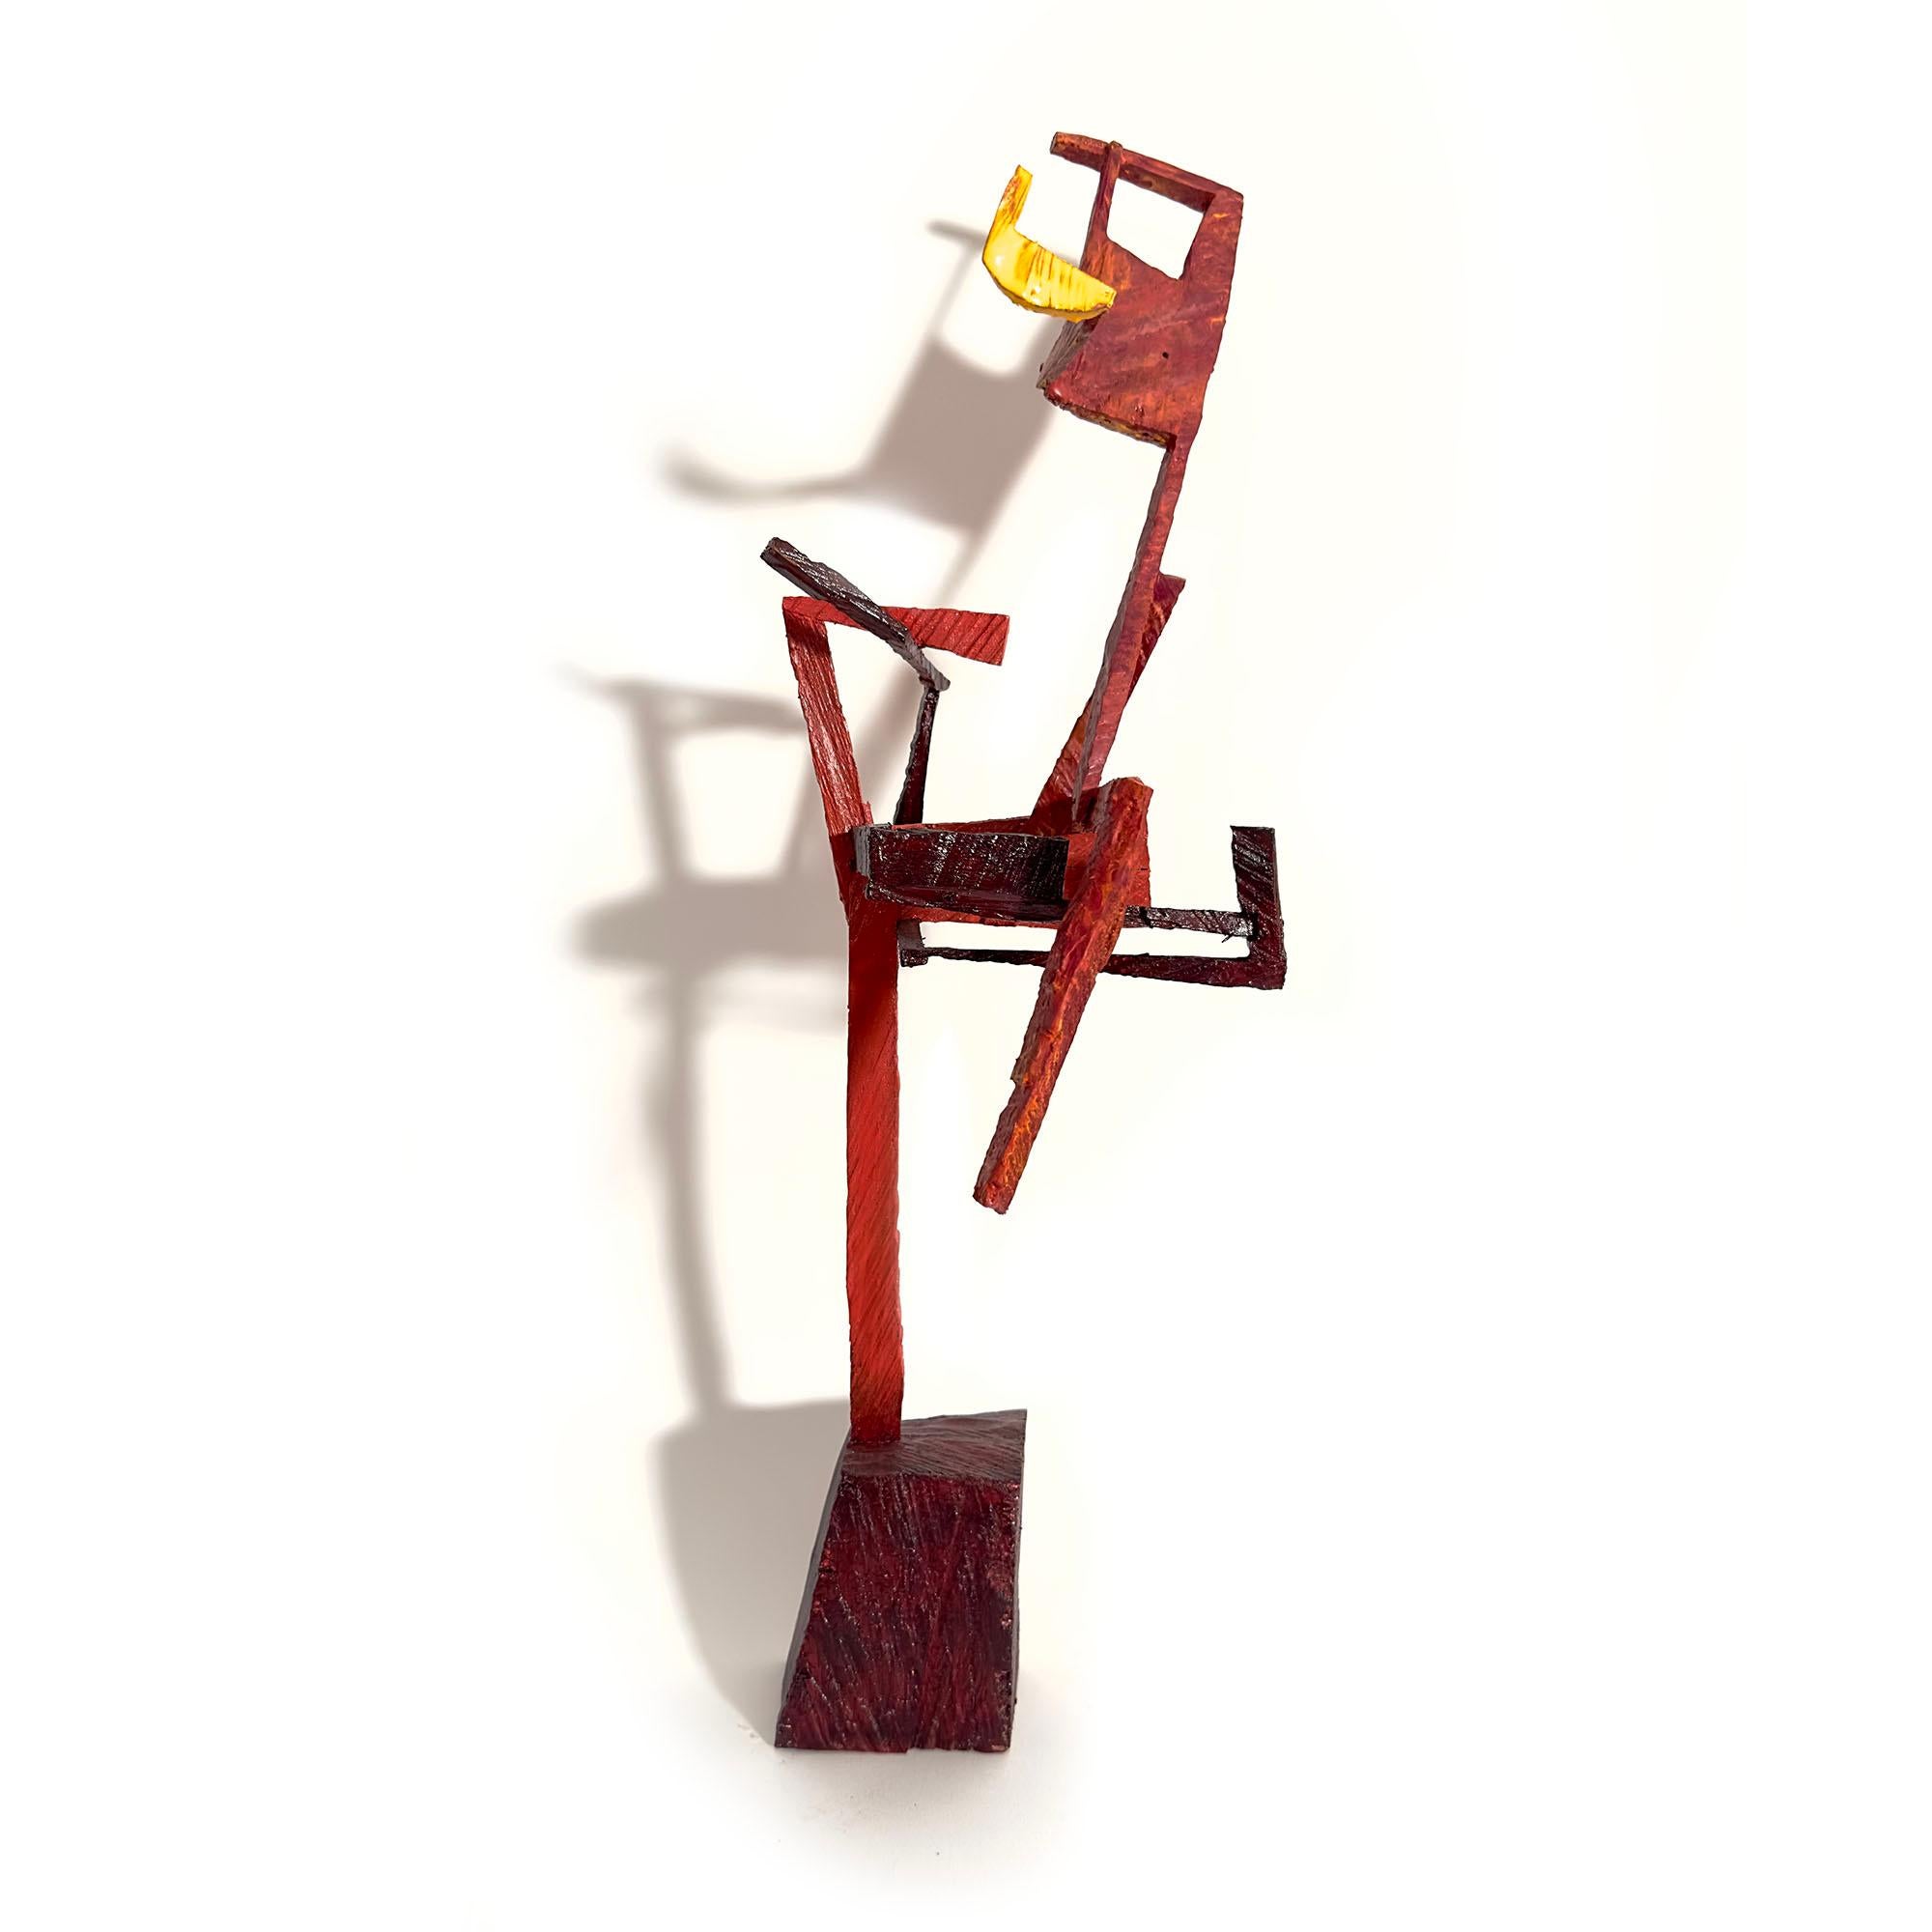 Joe Sultan Abstract Sculpture - Joey, abstract geometric wooden sculpture